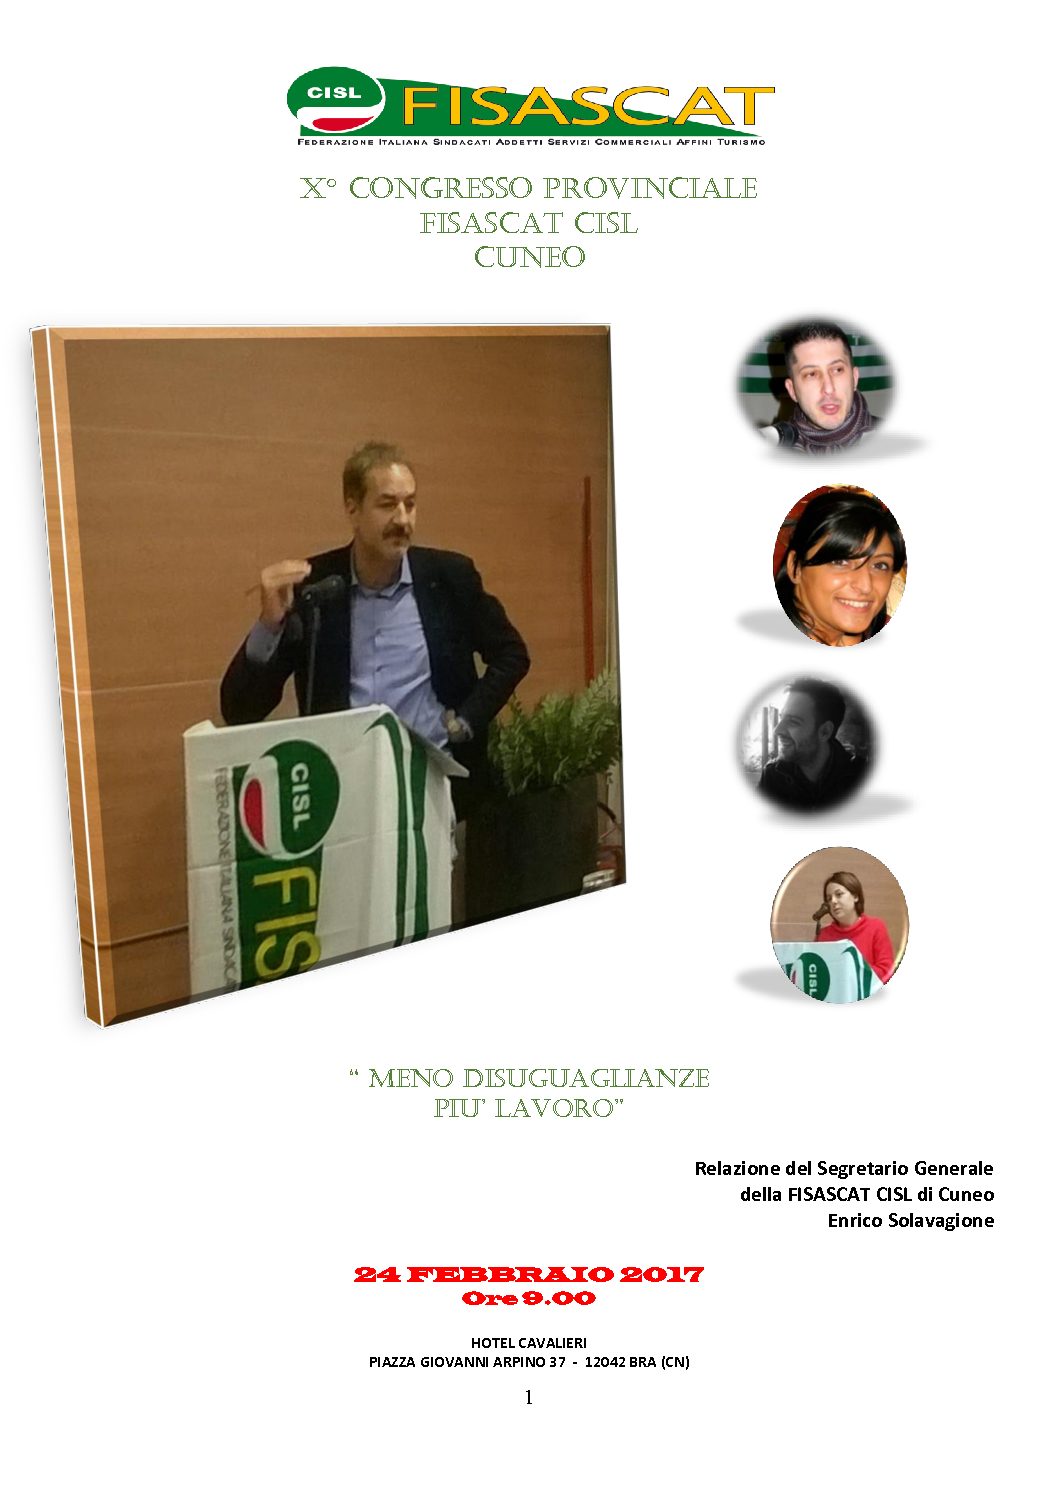 Fisascat Cisl Cuneo - X Congresso provinciale